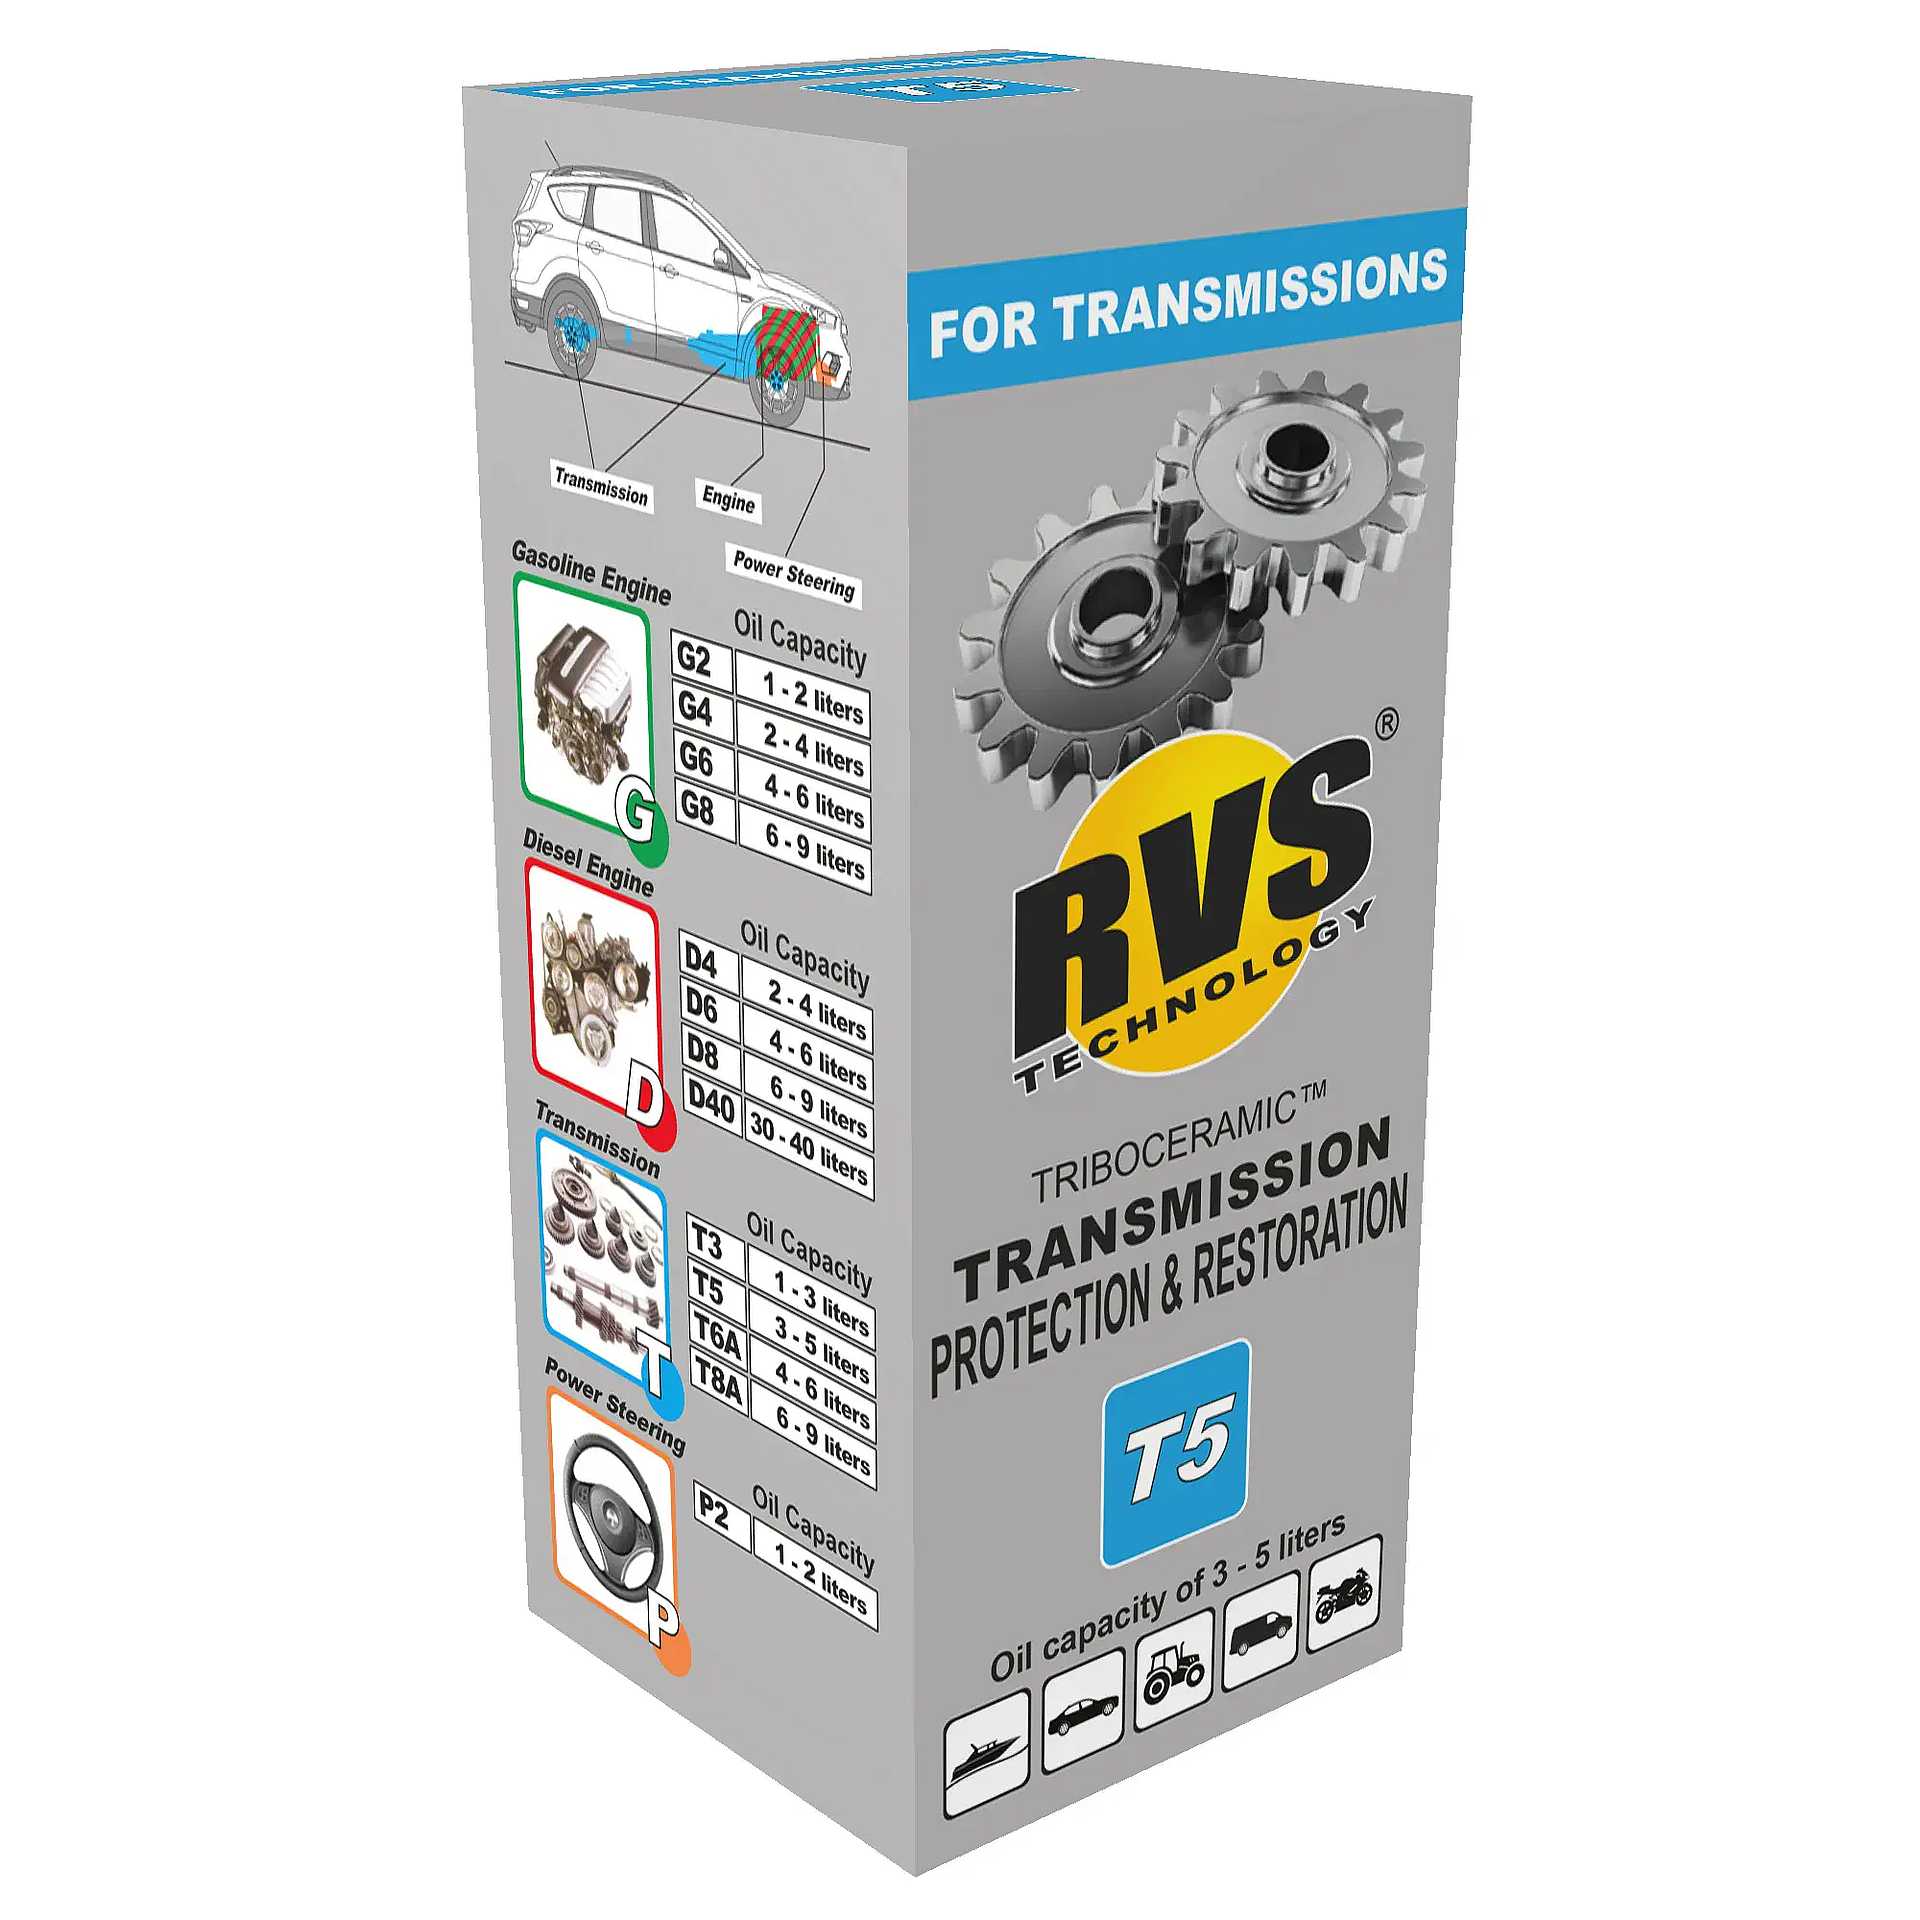 RVS Transmission Protection & Restoration